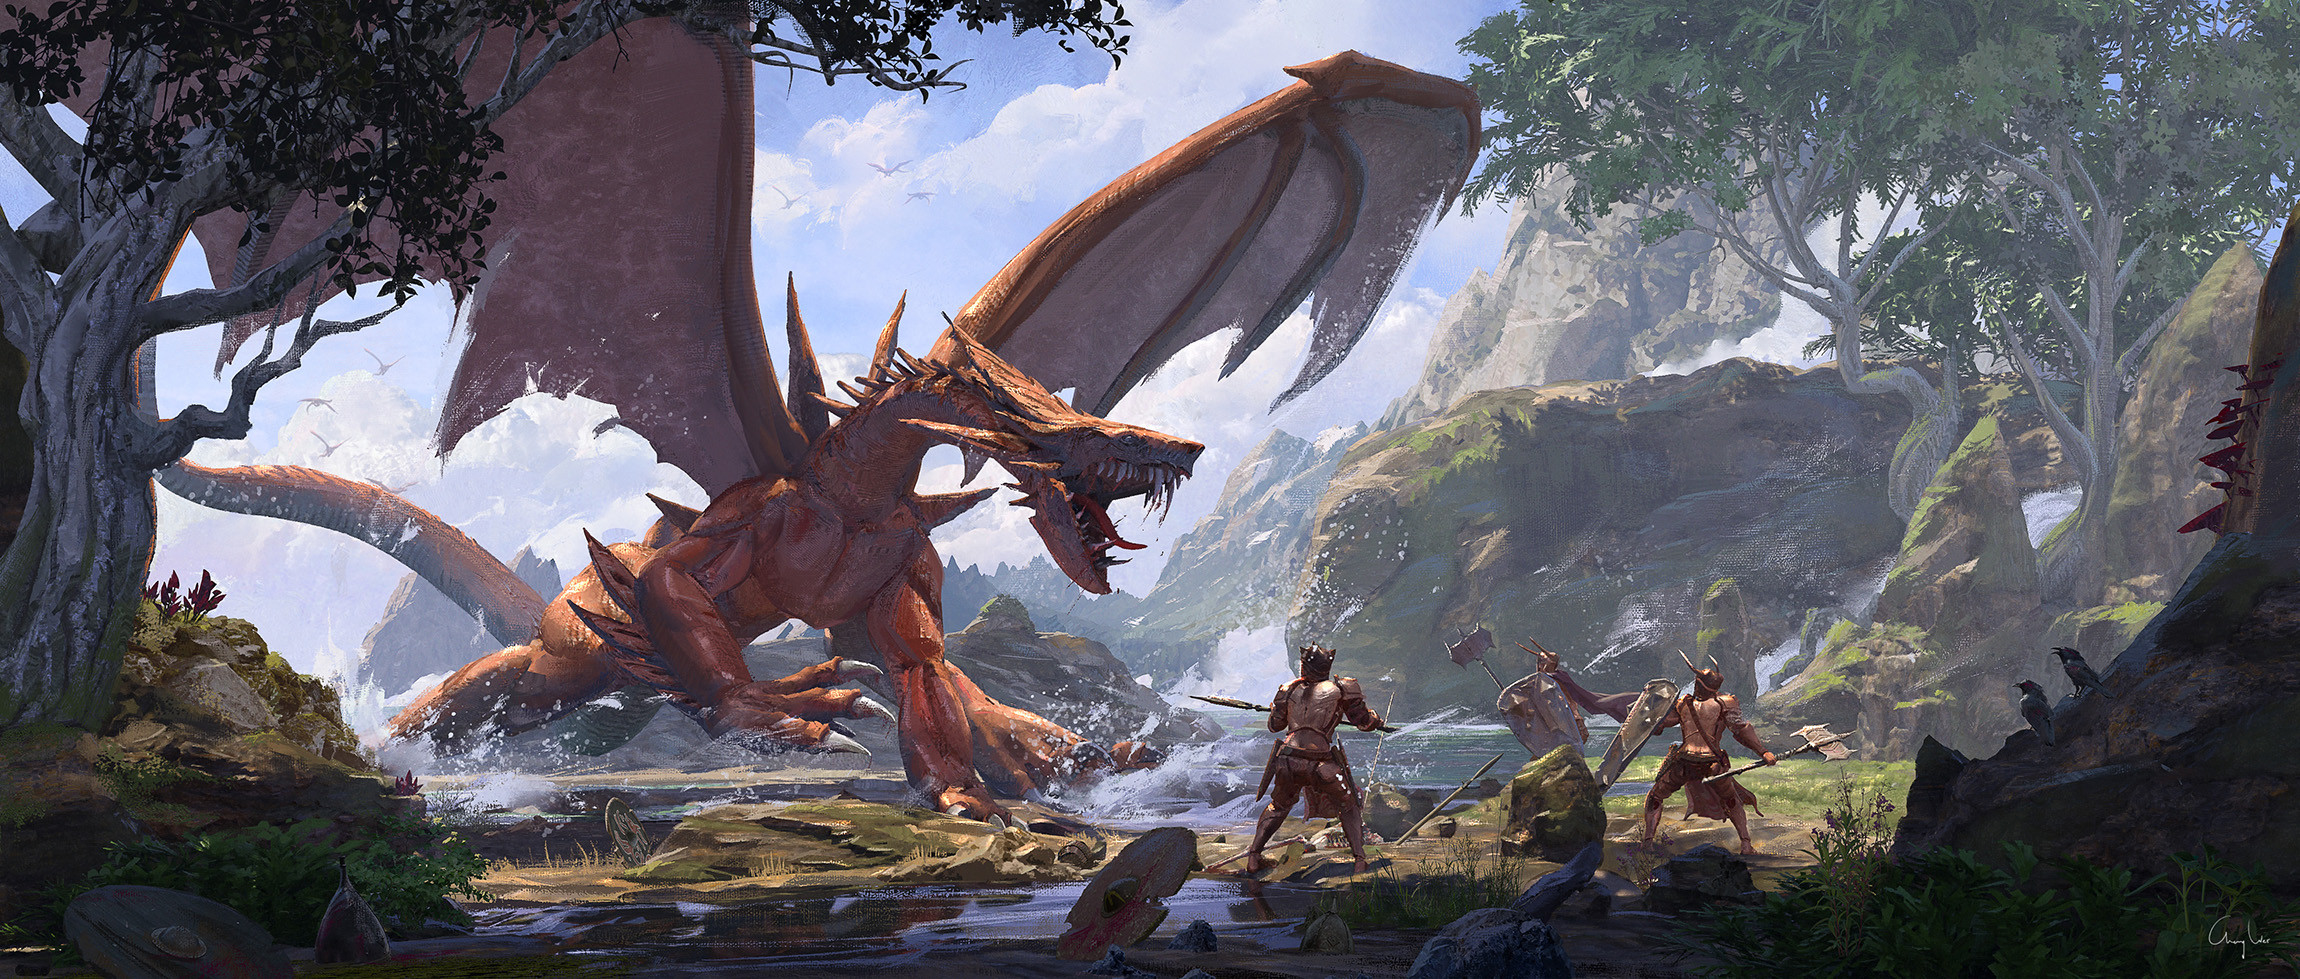 Chang Wei Chen Artwork Fantasy Art Dragon Creature Adventurers 2300x979